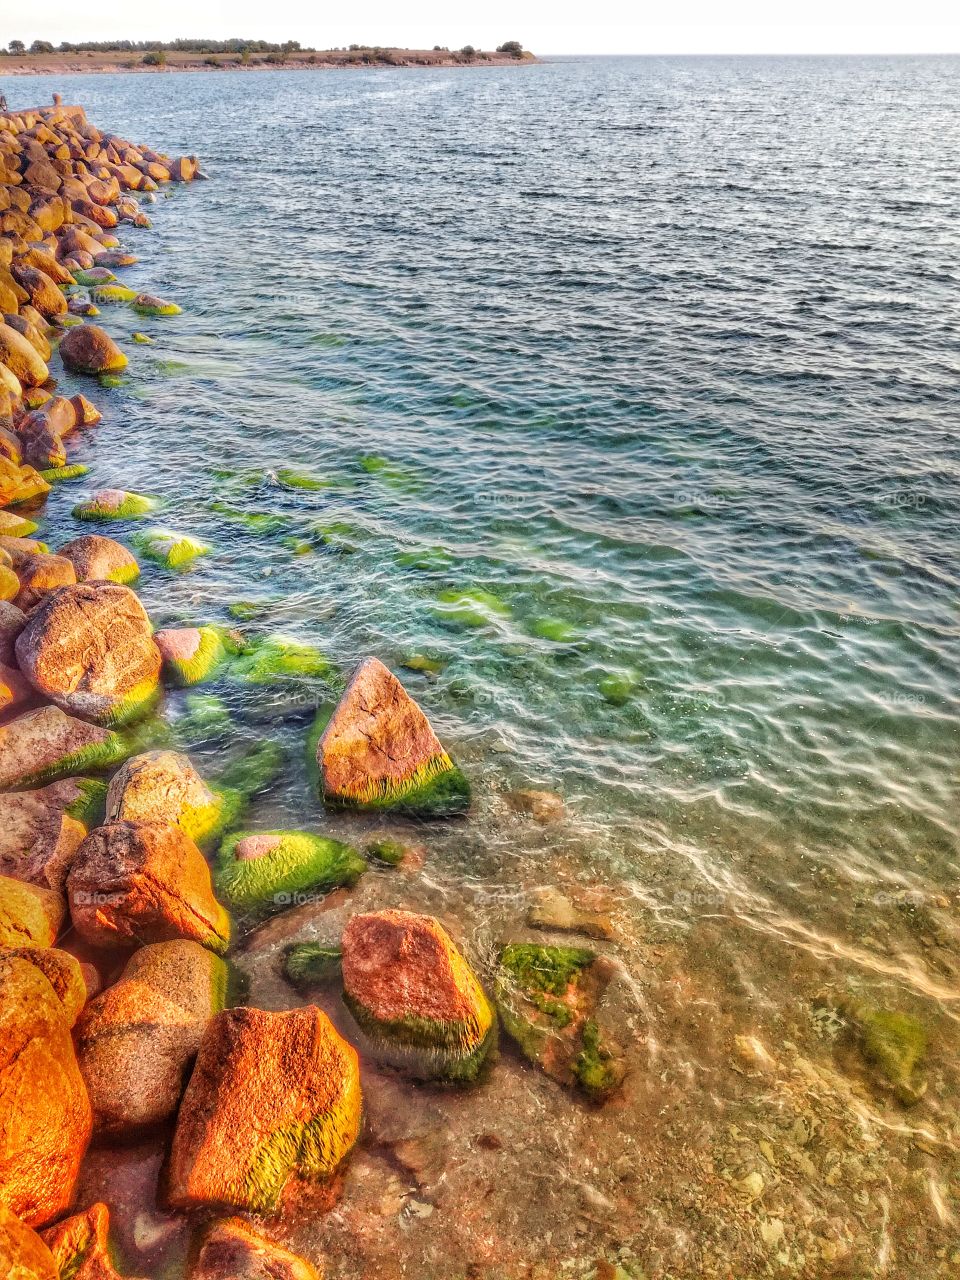 rocks shore in Sweden's Öland